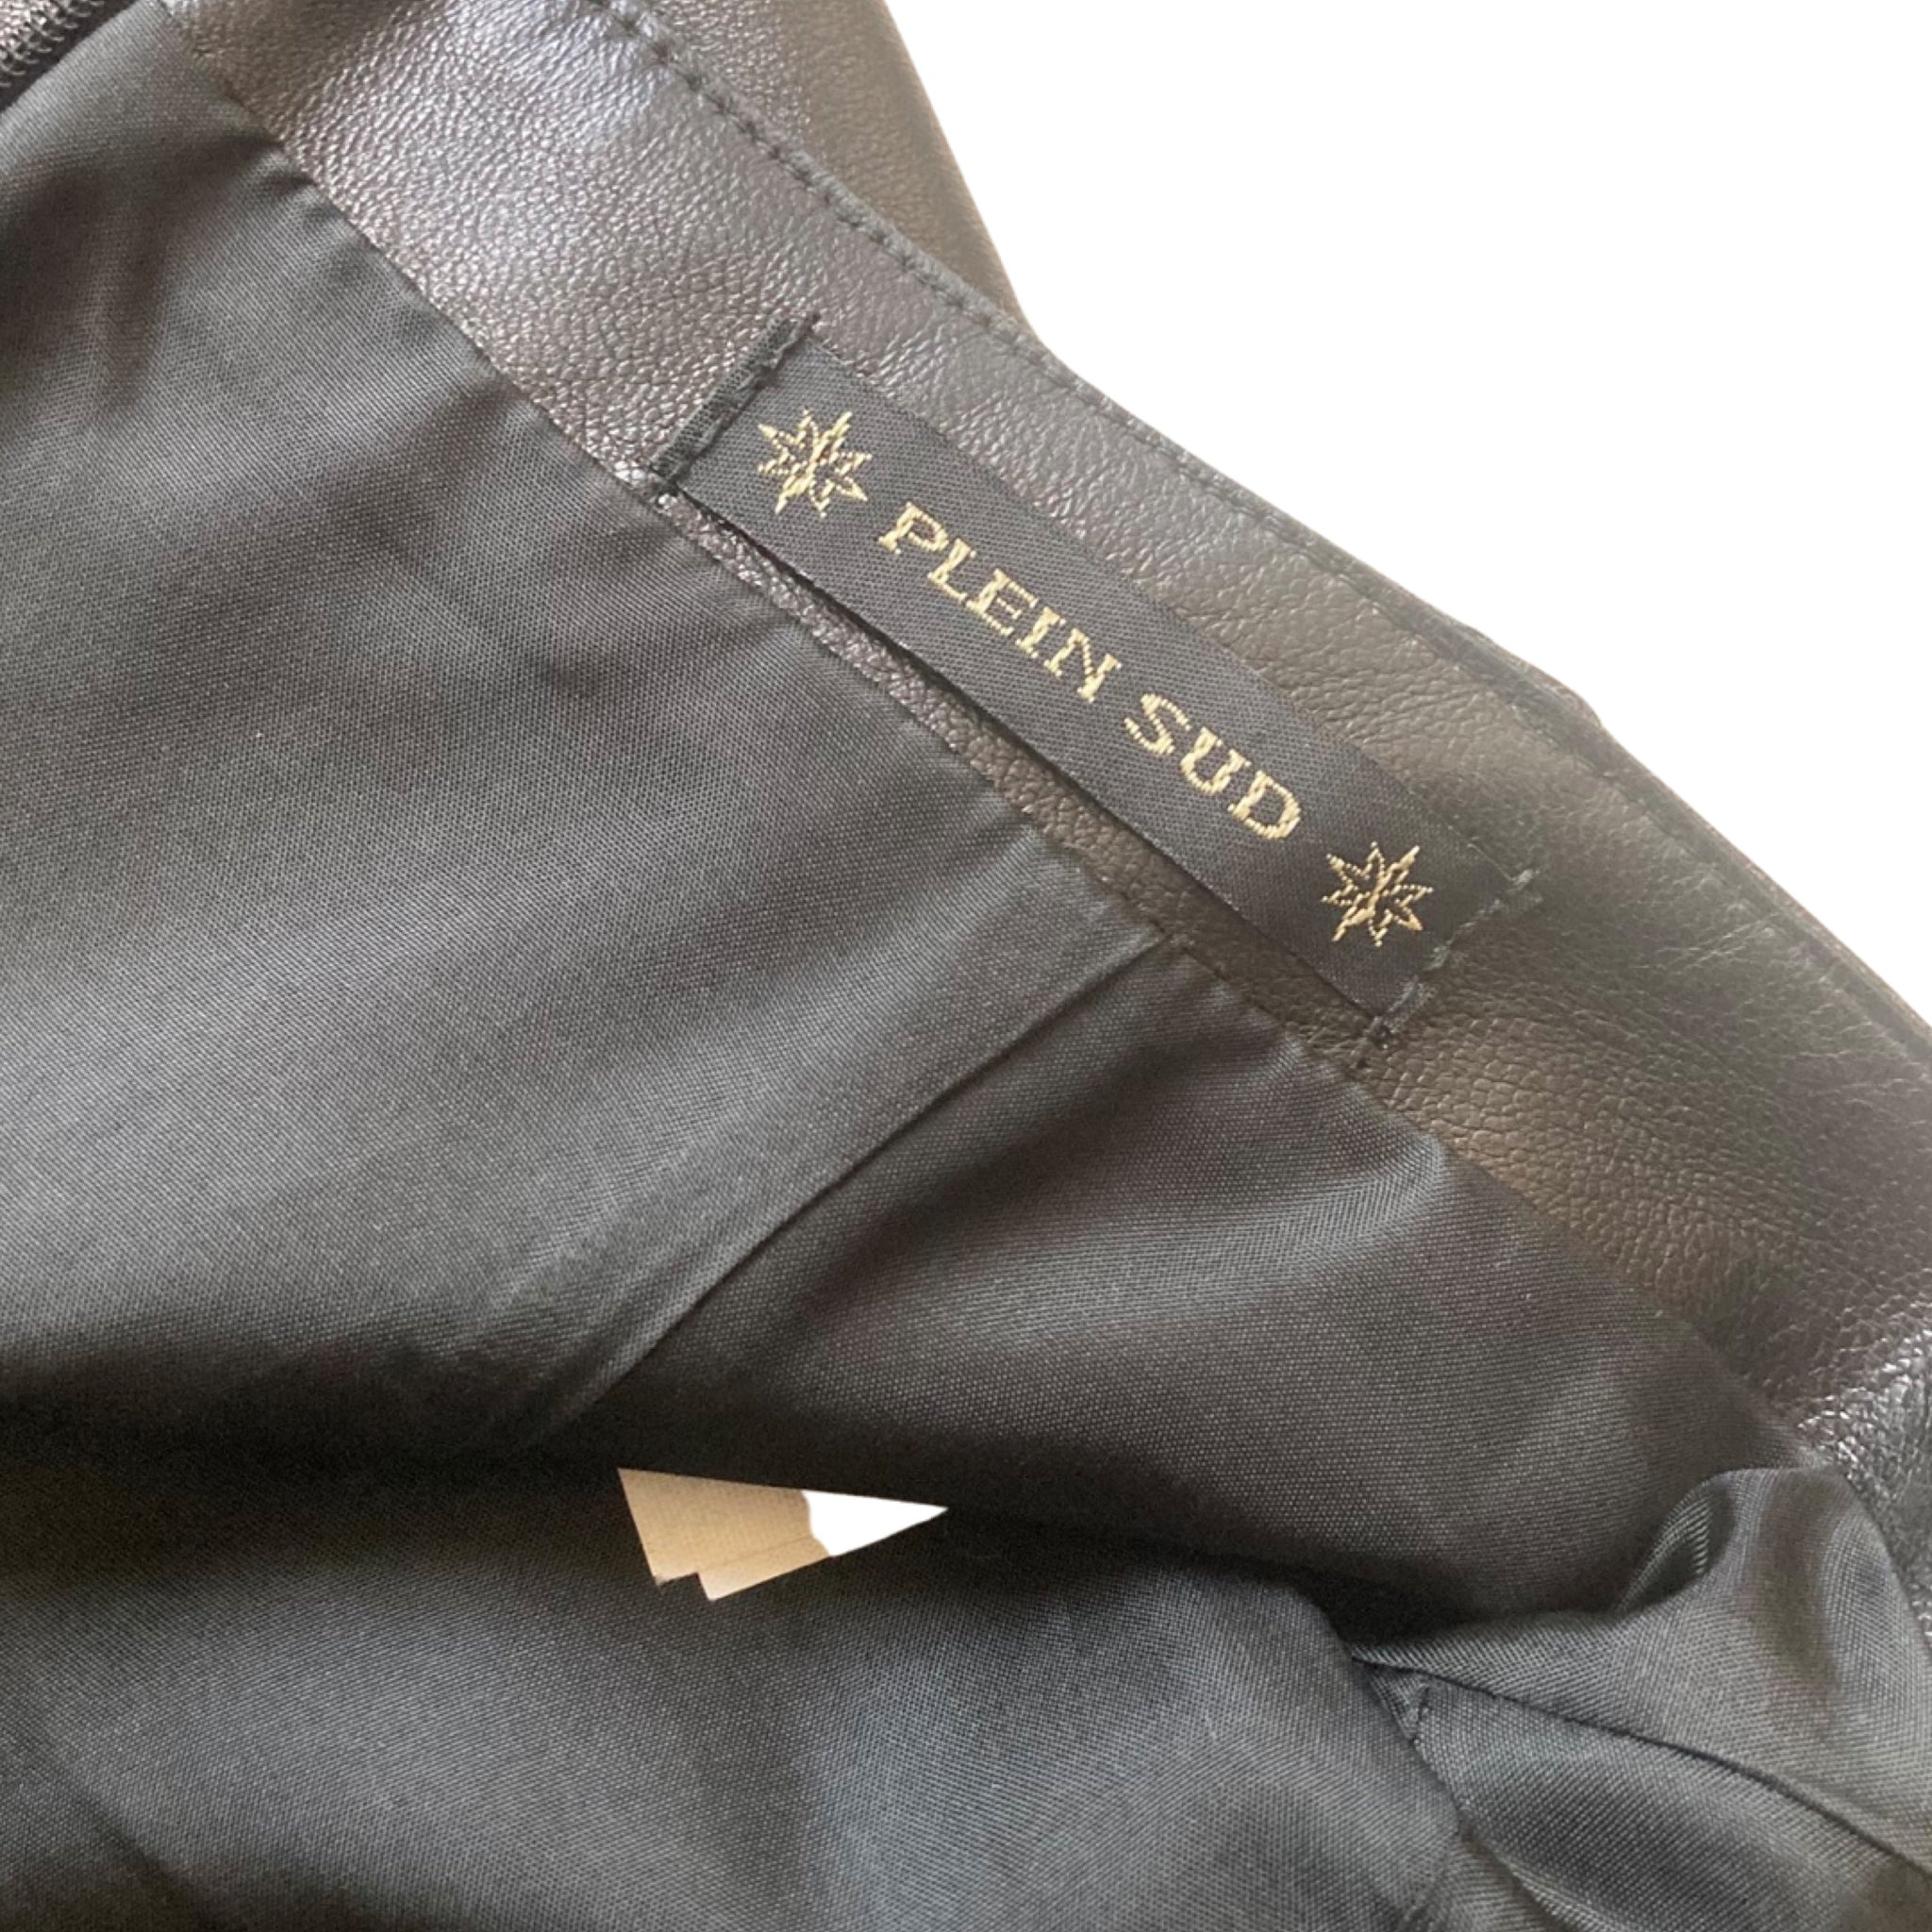 Plein Sud 2000's halter leather dress